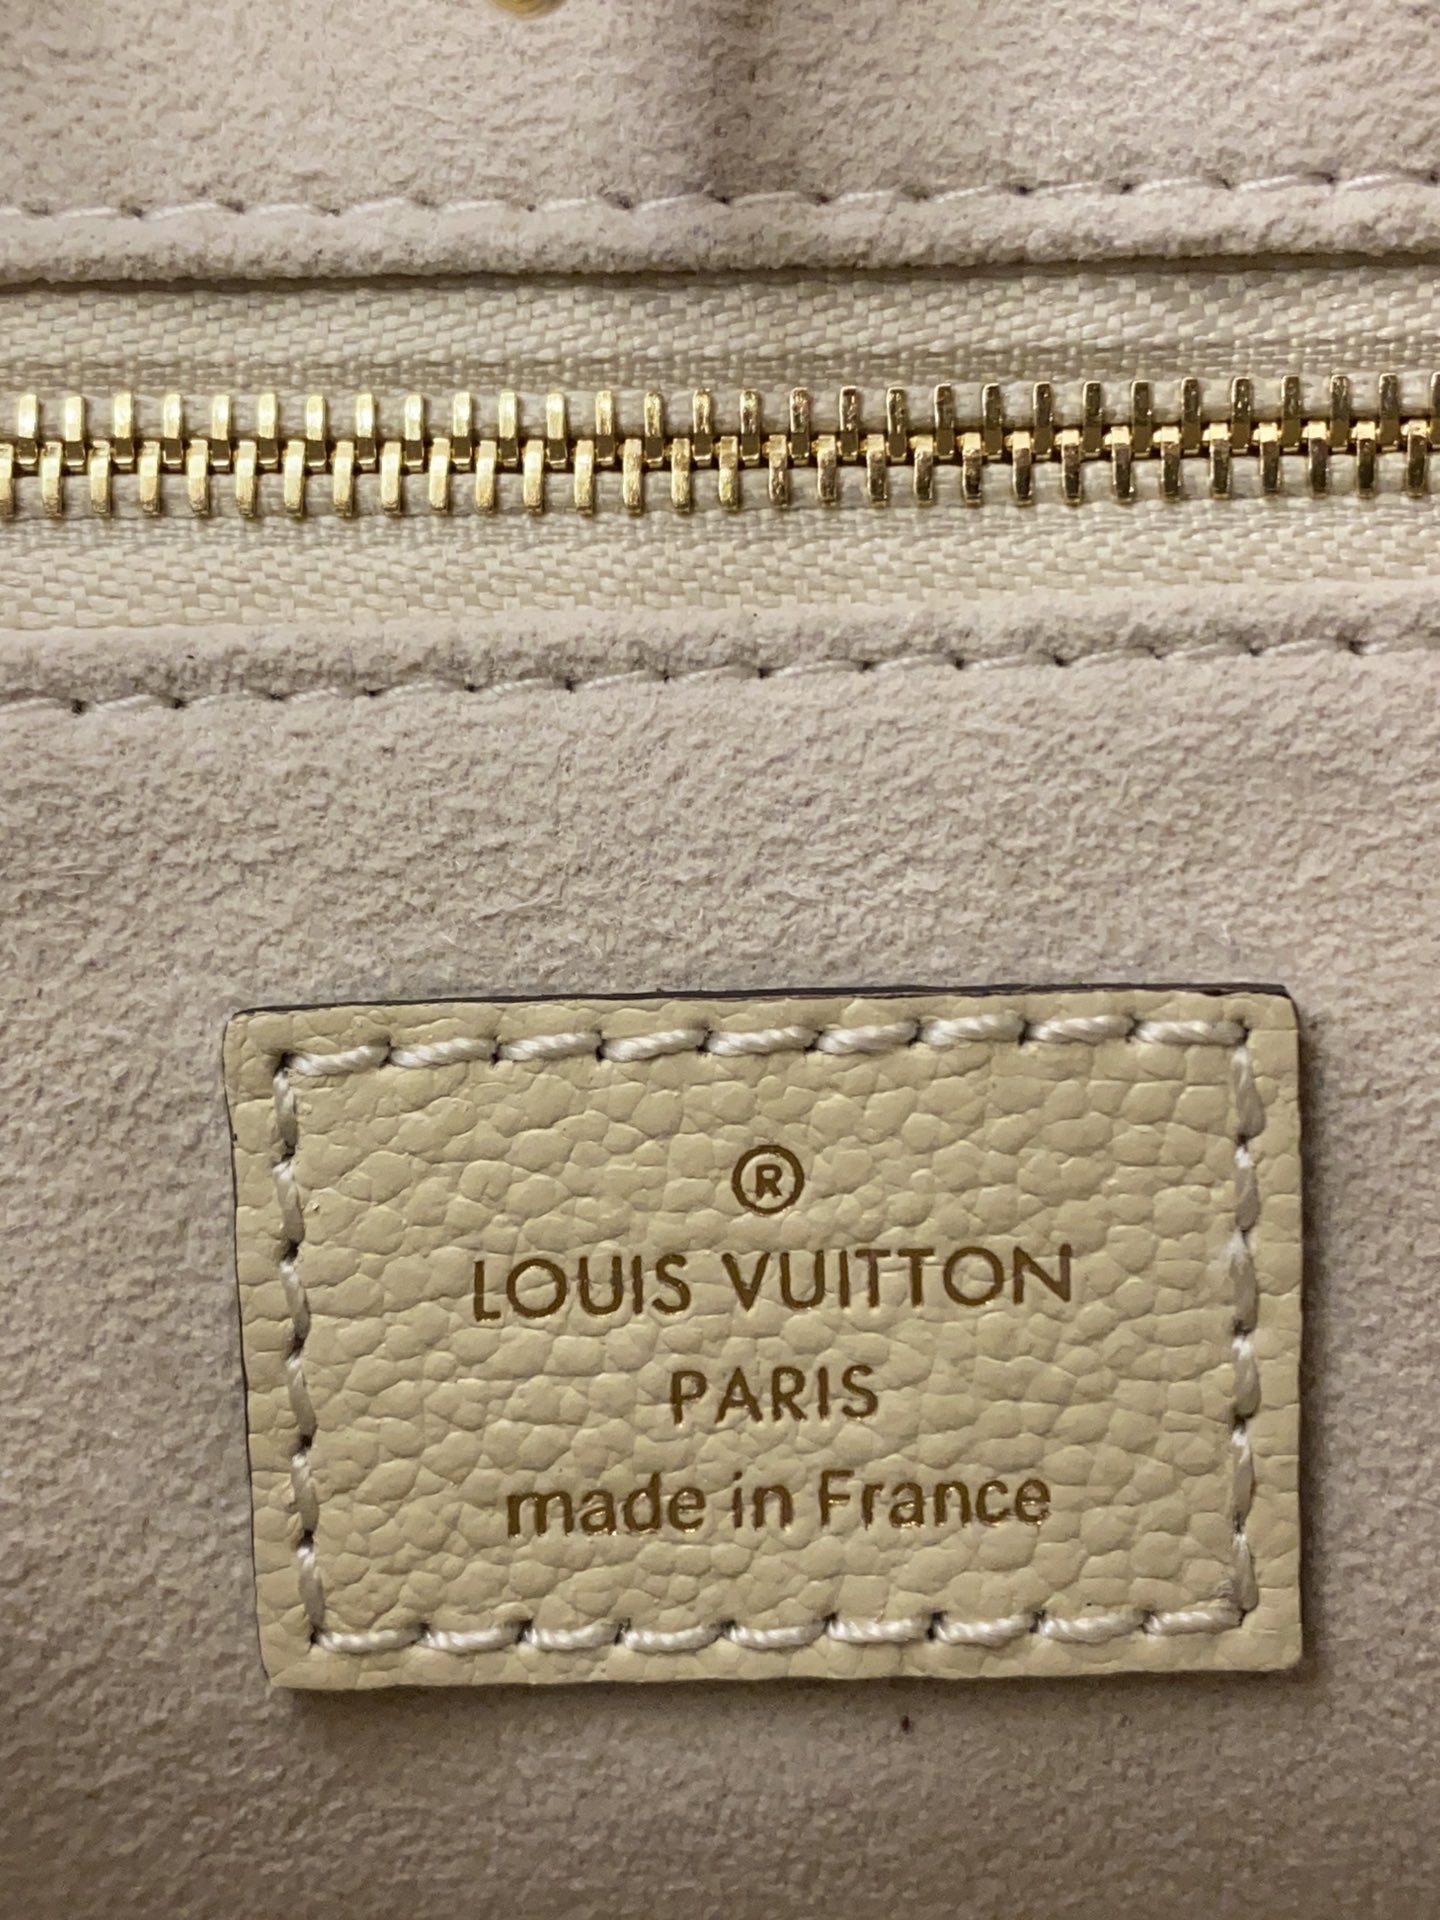 Louis Vuitton LV Onthego小号Tote包 M45654奶白色